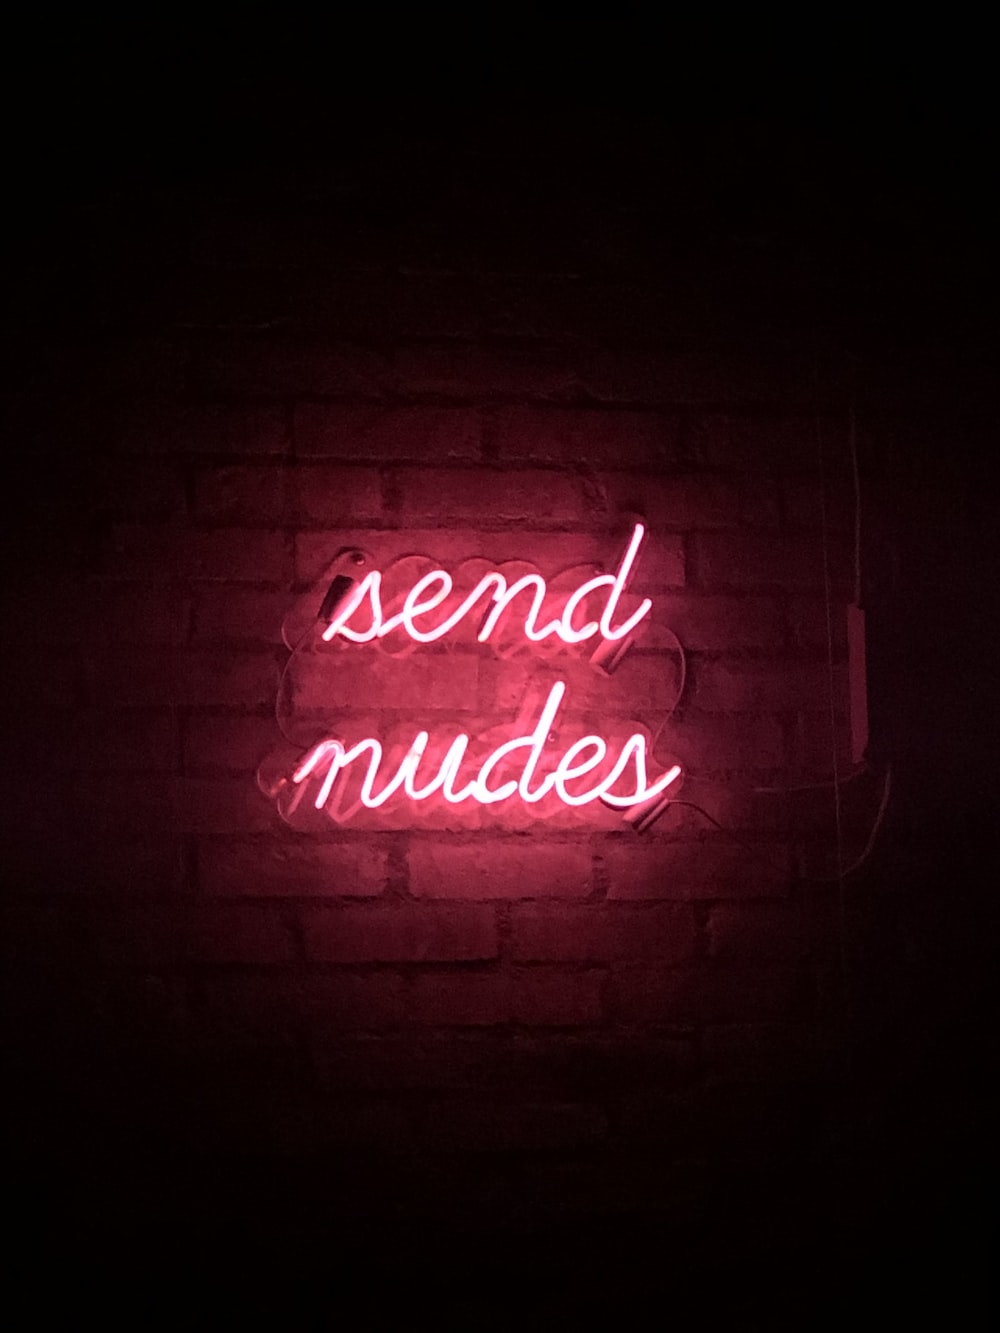 send nudes neon signage